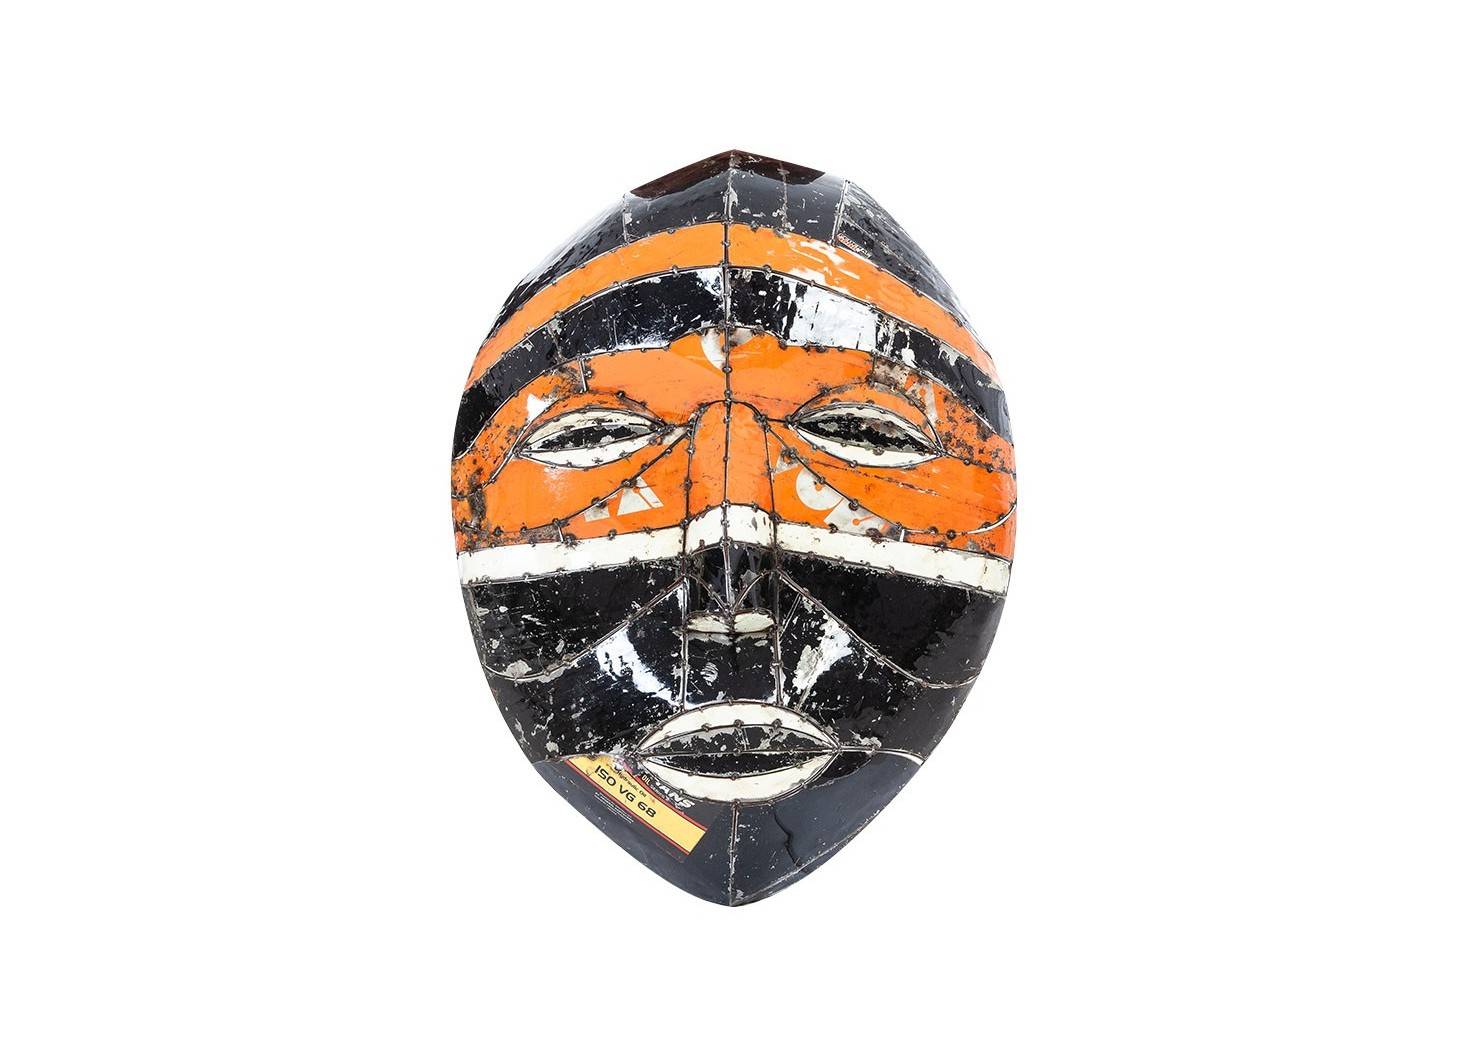 Masque mural en bidons recyclés - artisanat